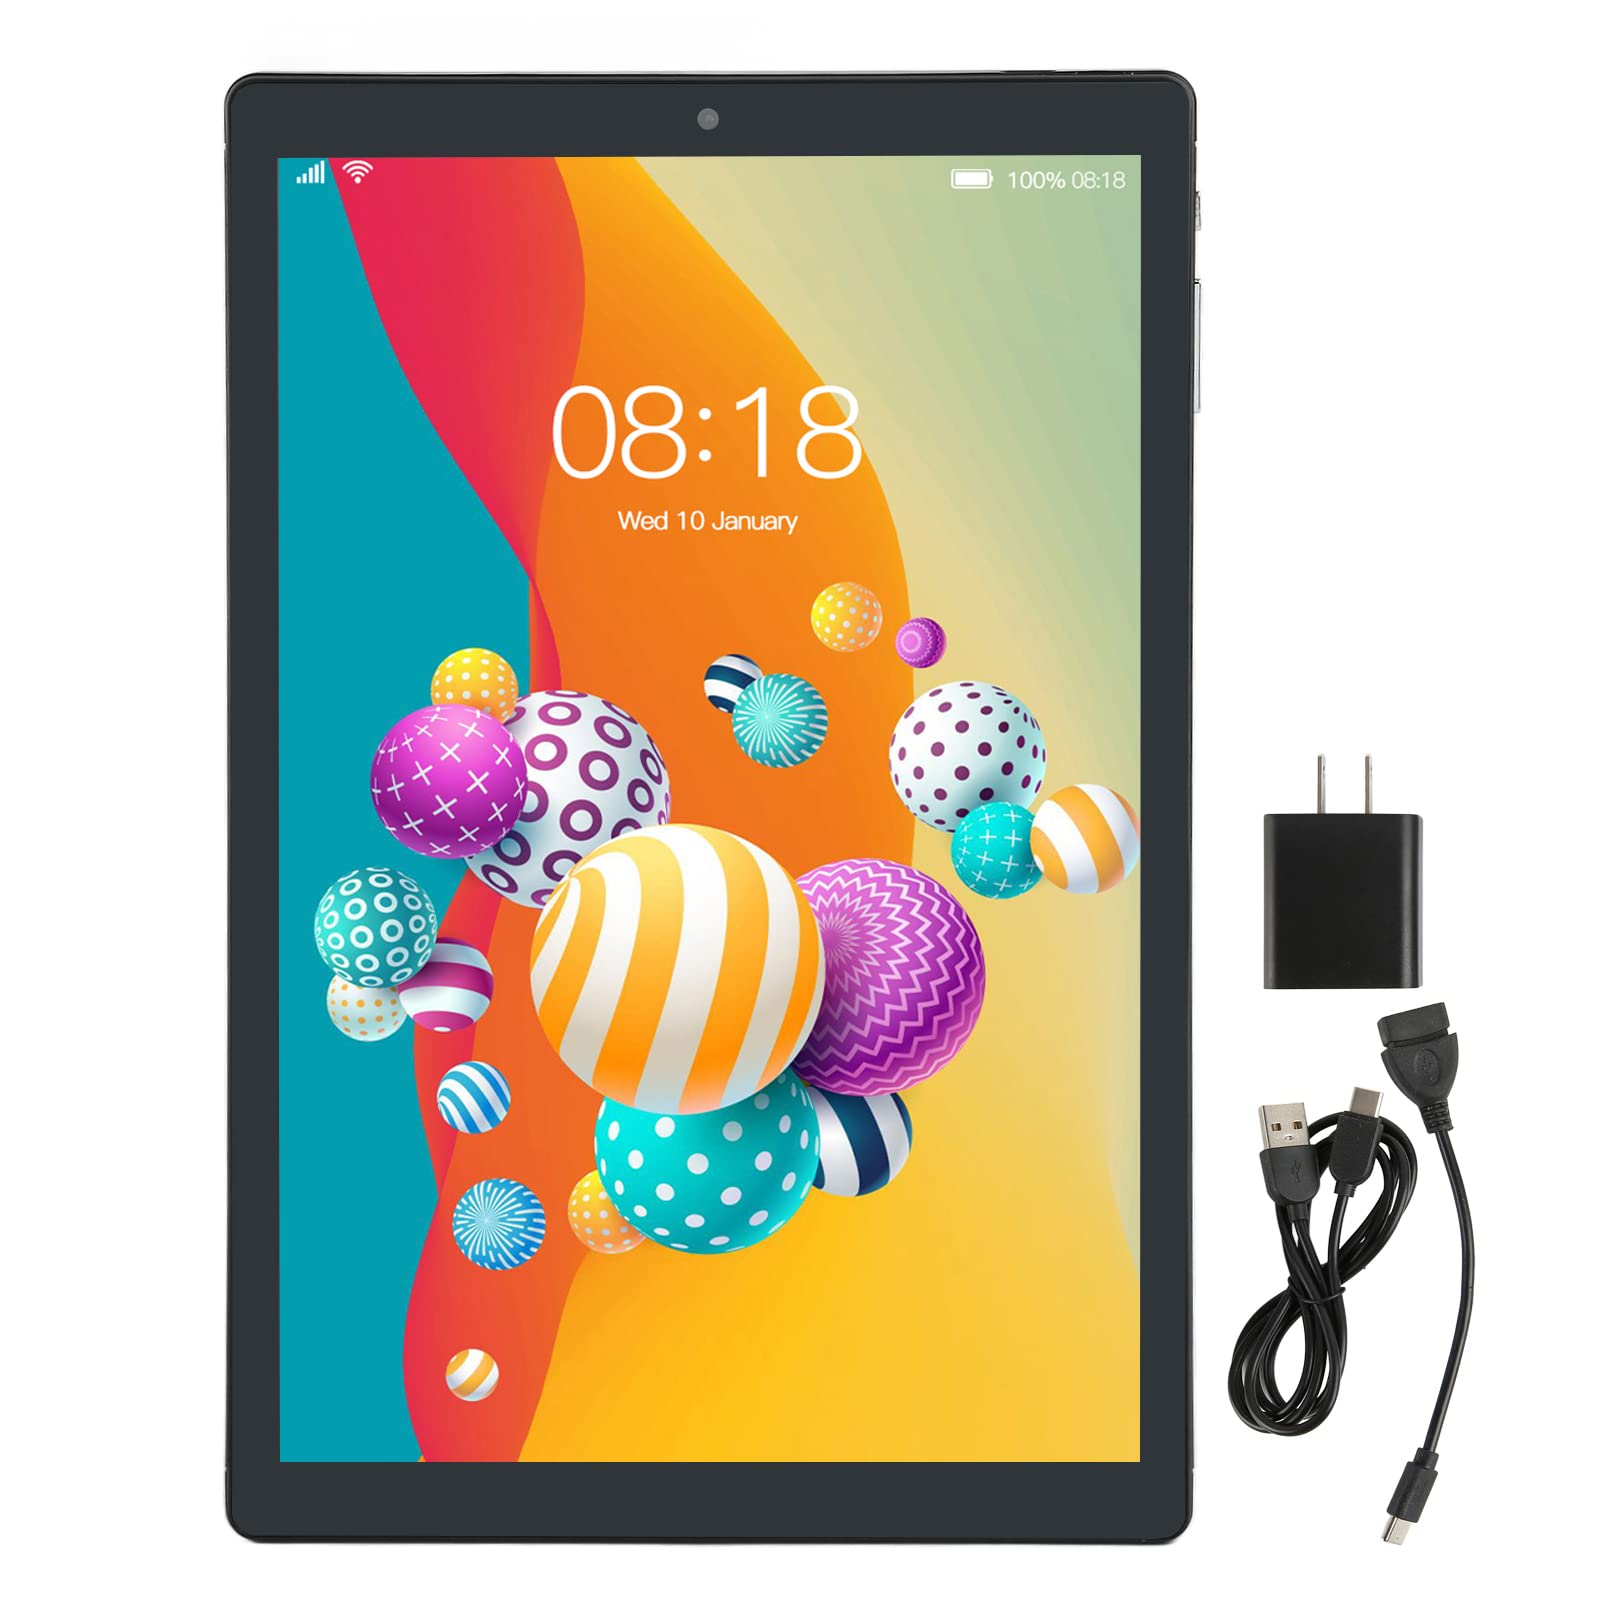 Jiawu 10.1 Inch Tablet, Android 12 Tablet, 6GB RAM 128GB ROM, 1960x1080 HD IPS Display Dual Camera Tablet, 5G WiFi, GPS, Bluetooth 5.0, 8800mAh Battery, 10 Core Processor, Black